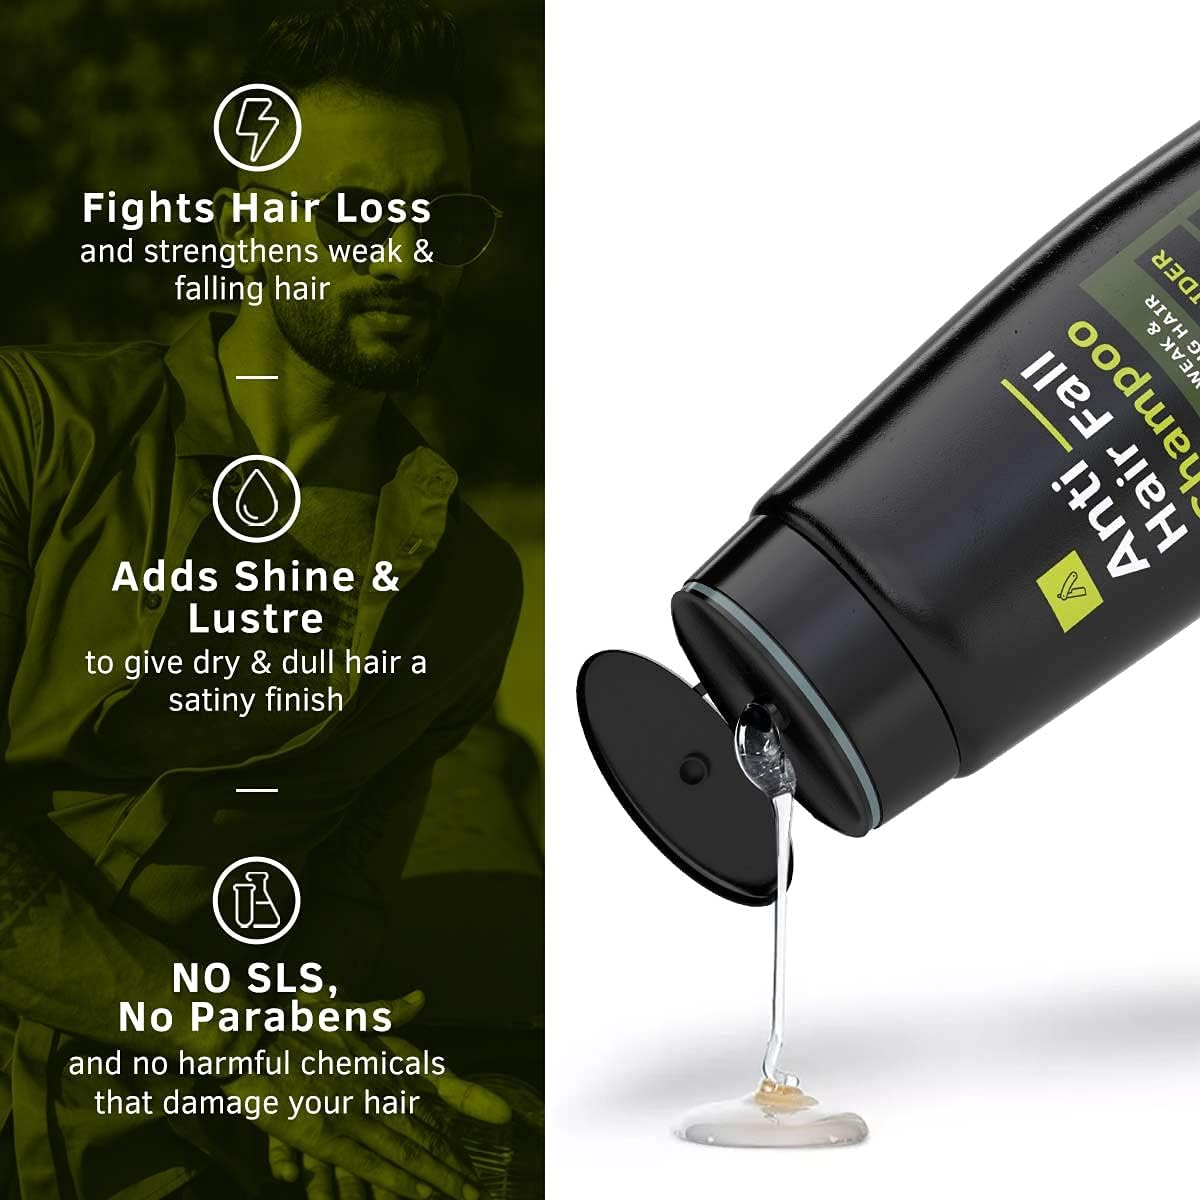 USTRAA Anti-Hair Fall Shampoo APPLE CIDER VINEGAR and GINSENG 250 ml